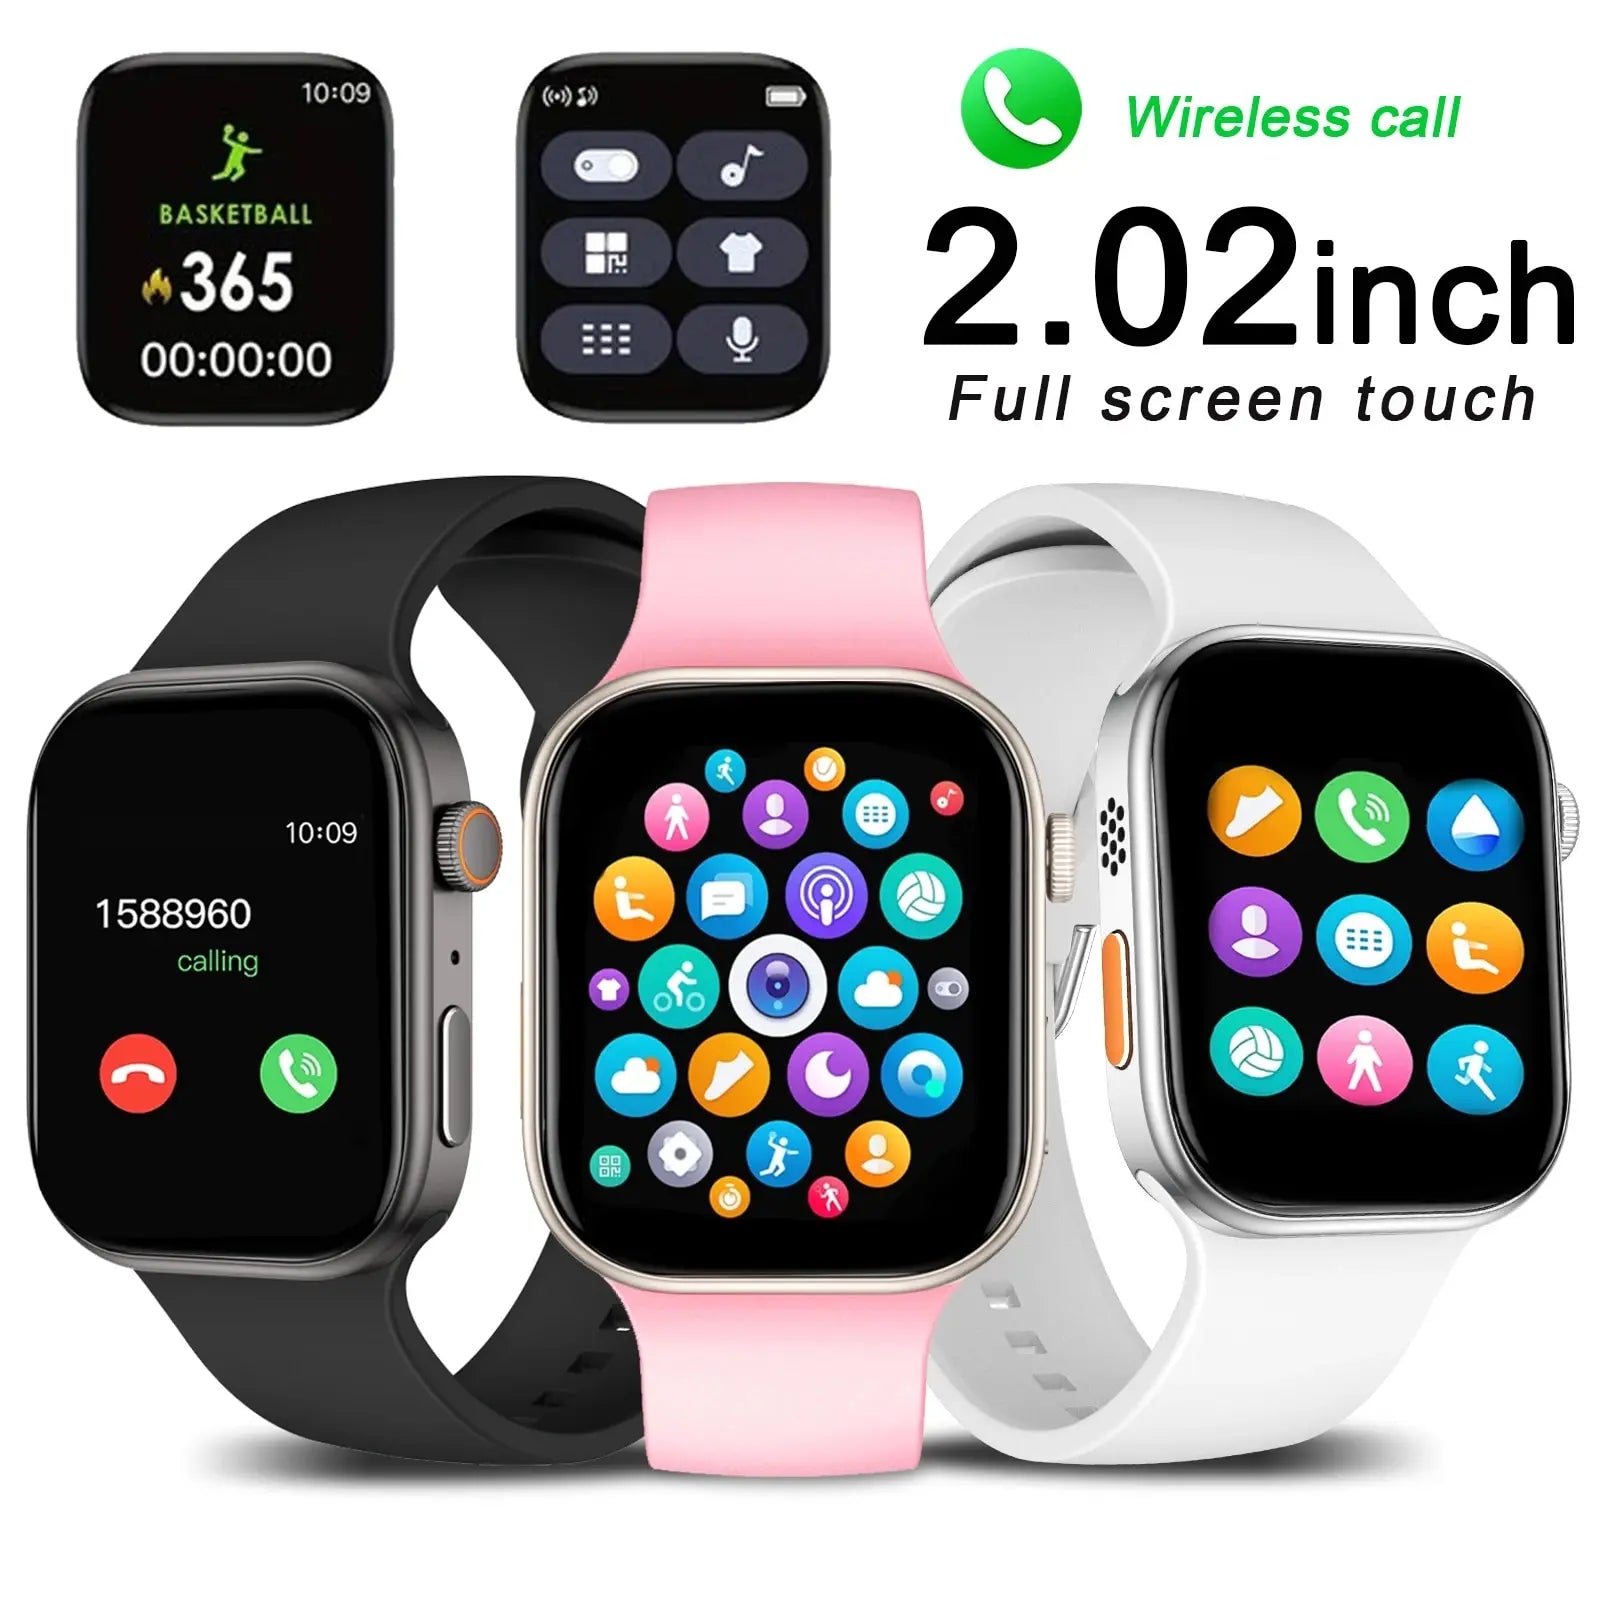 Smartwatch, Interest Alert View, Multiple App Alerts, Wireless